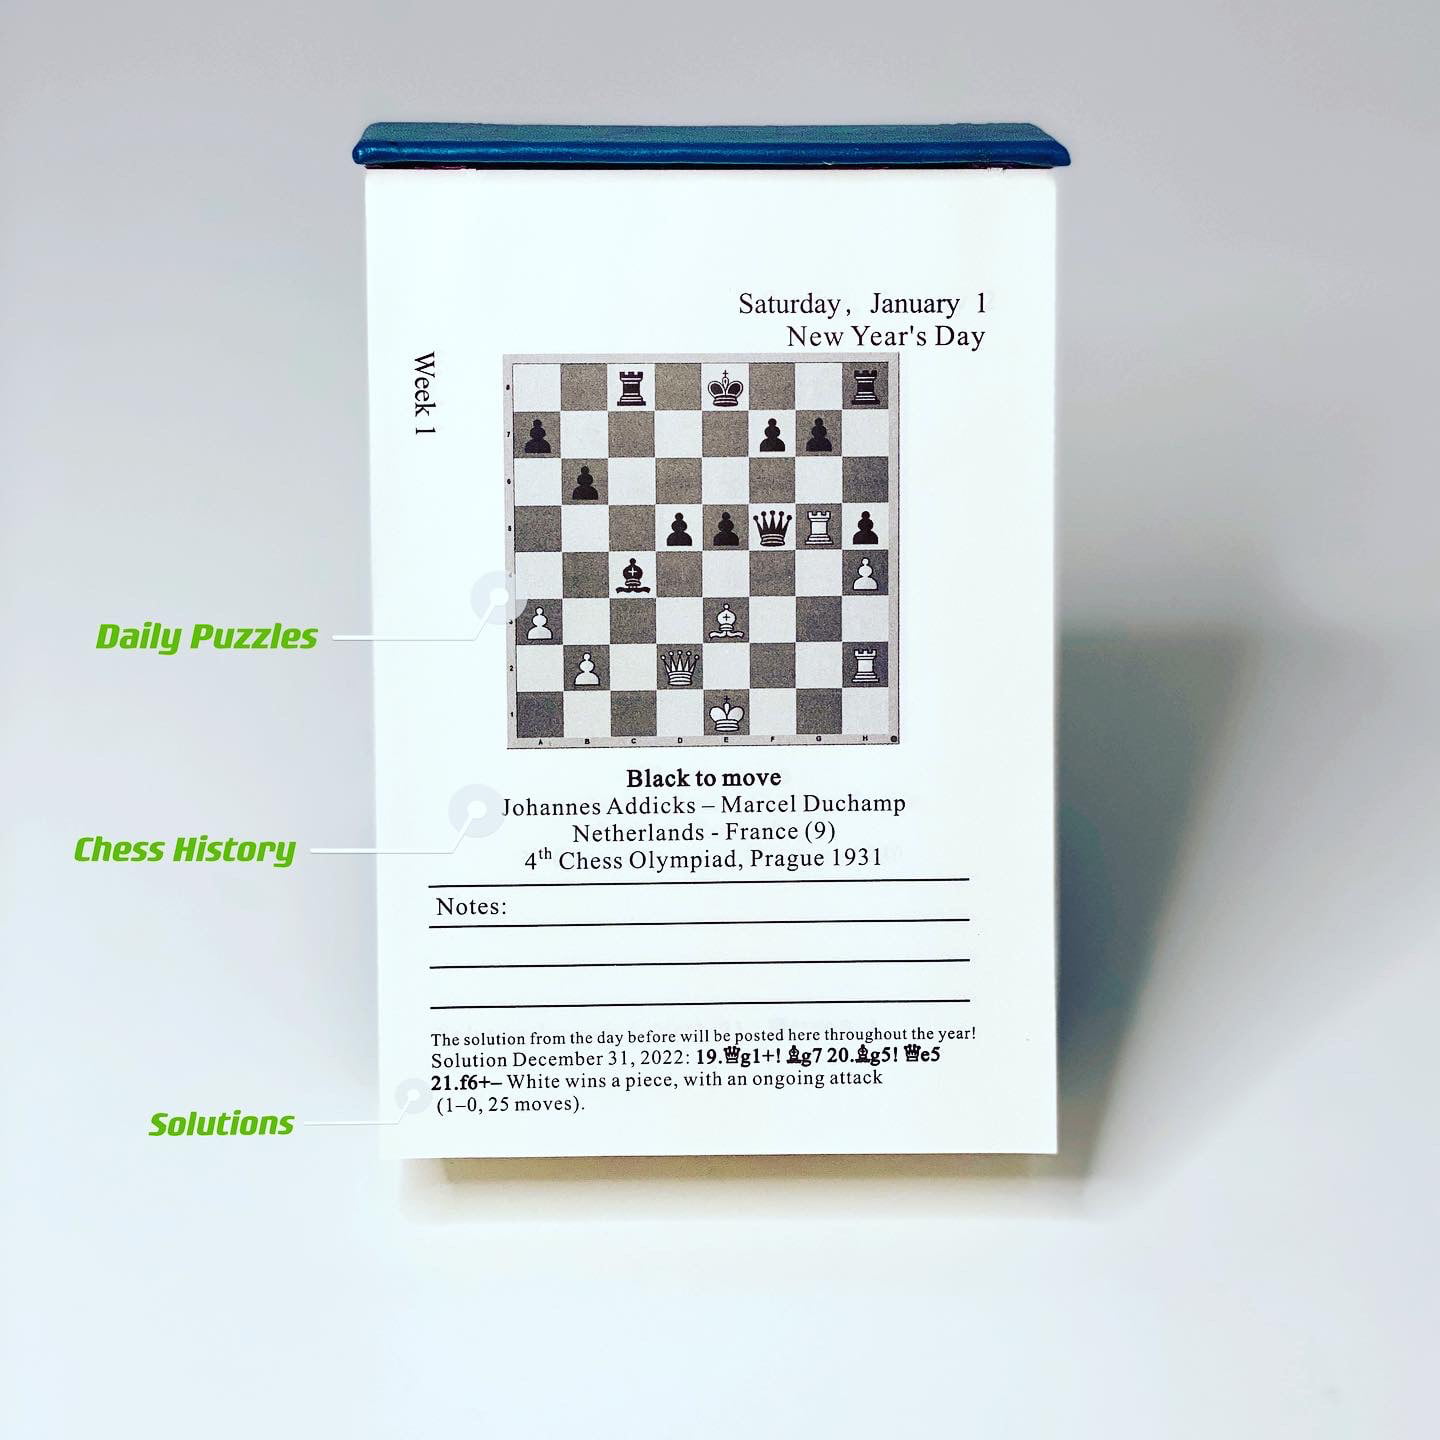 2022-chess-calendar-with-daily-puzzles-designed-by-im-silas-esben-lund-walmart